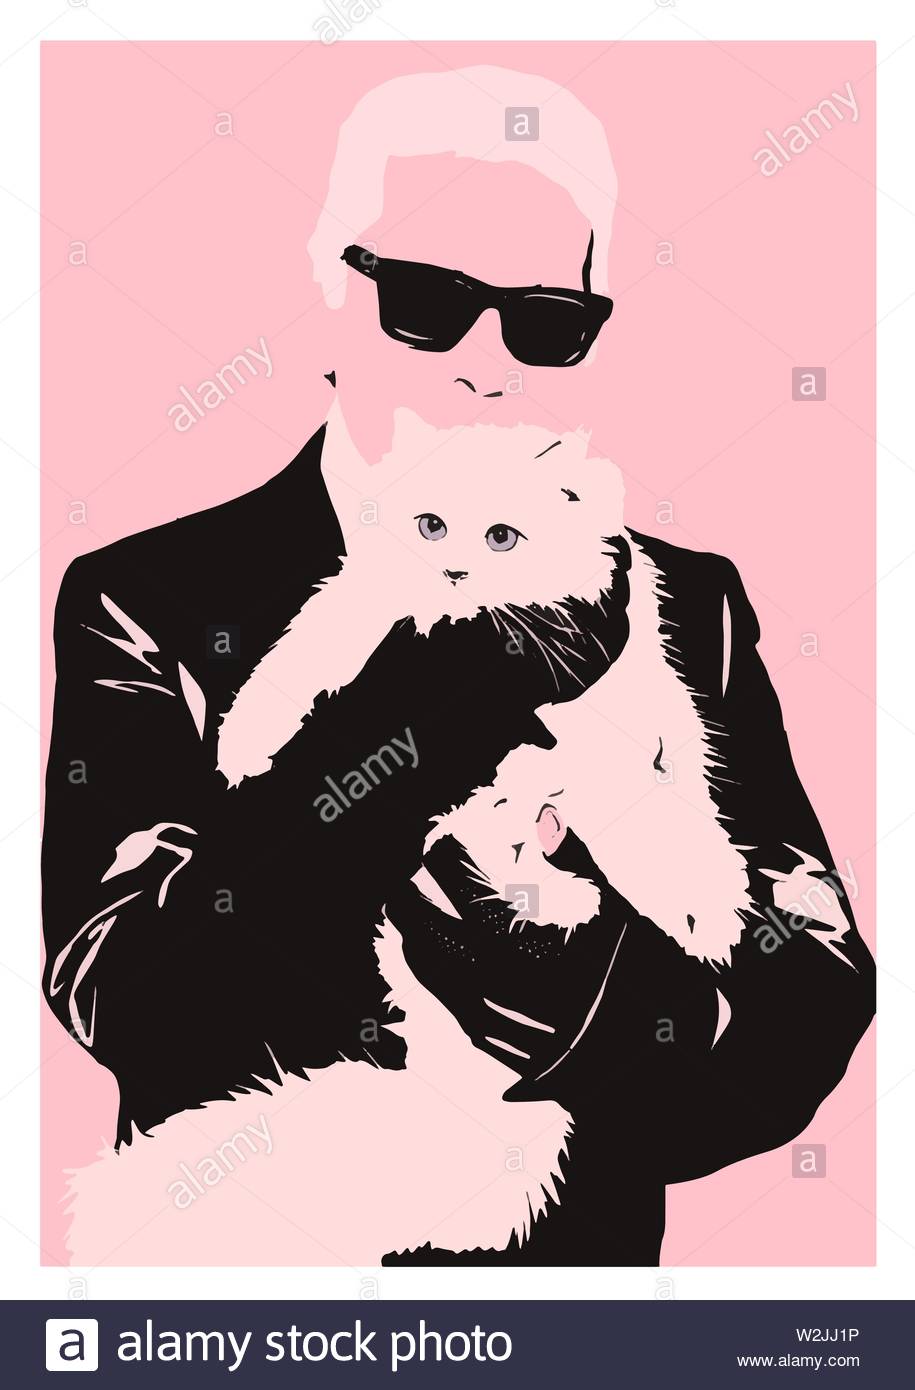 Karl Lagerfeld And Cat Illustration Stock Vector Image Art